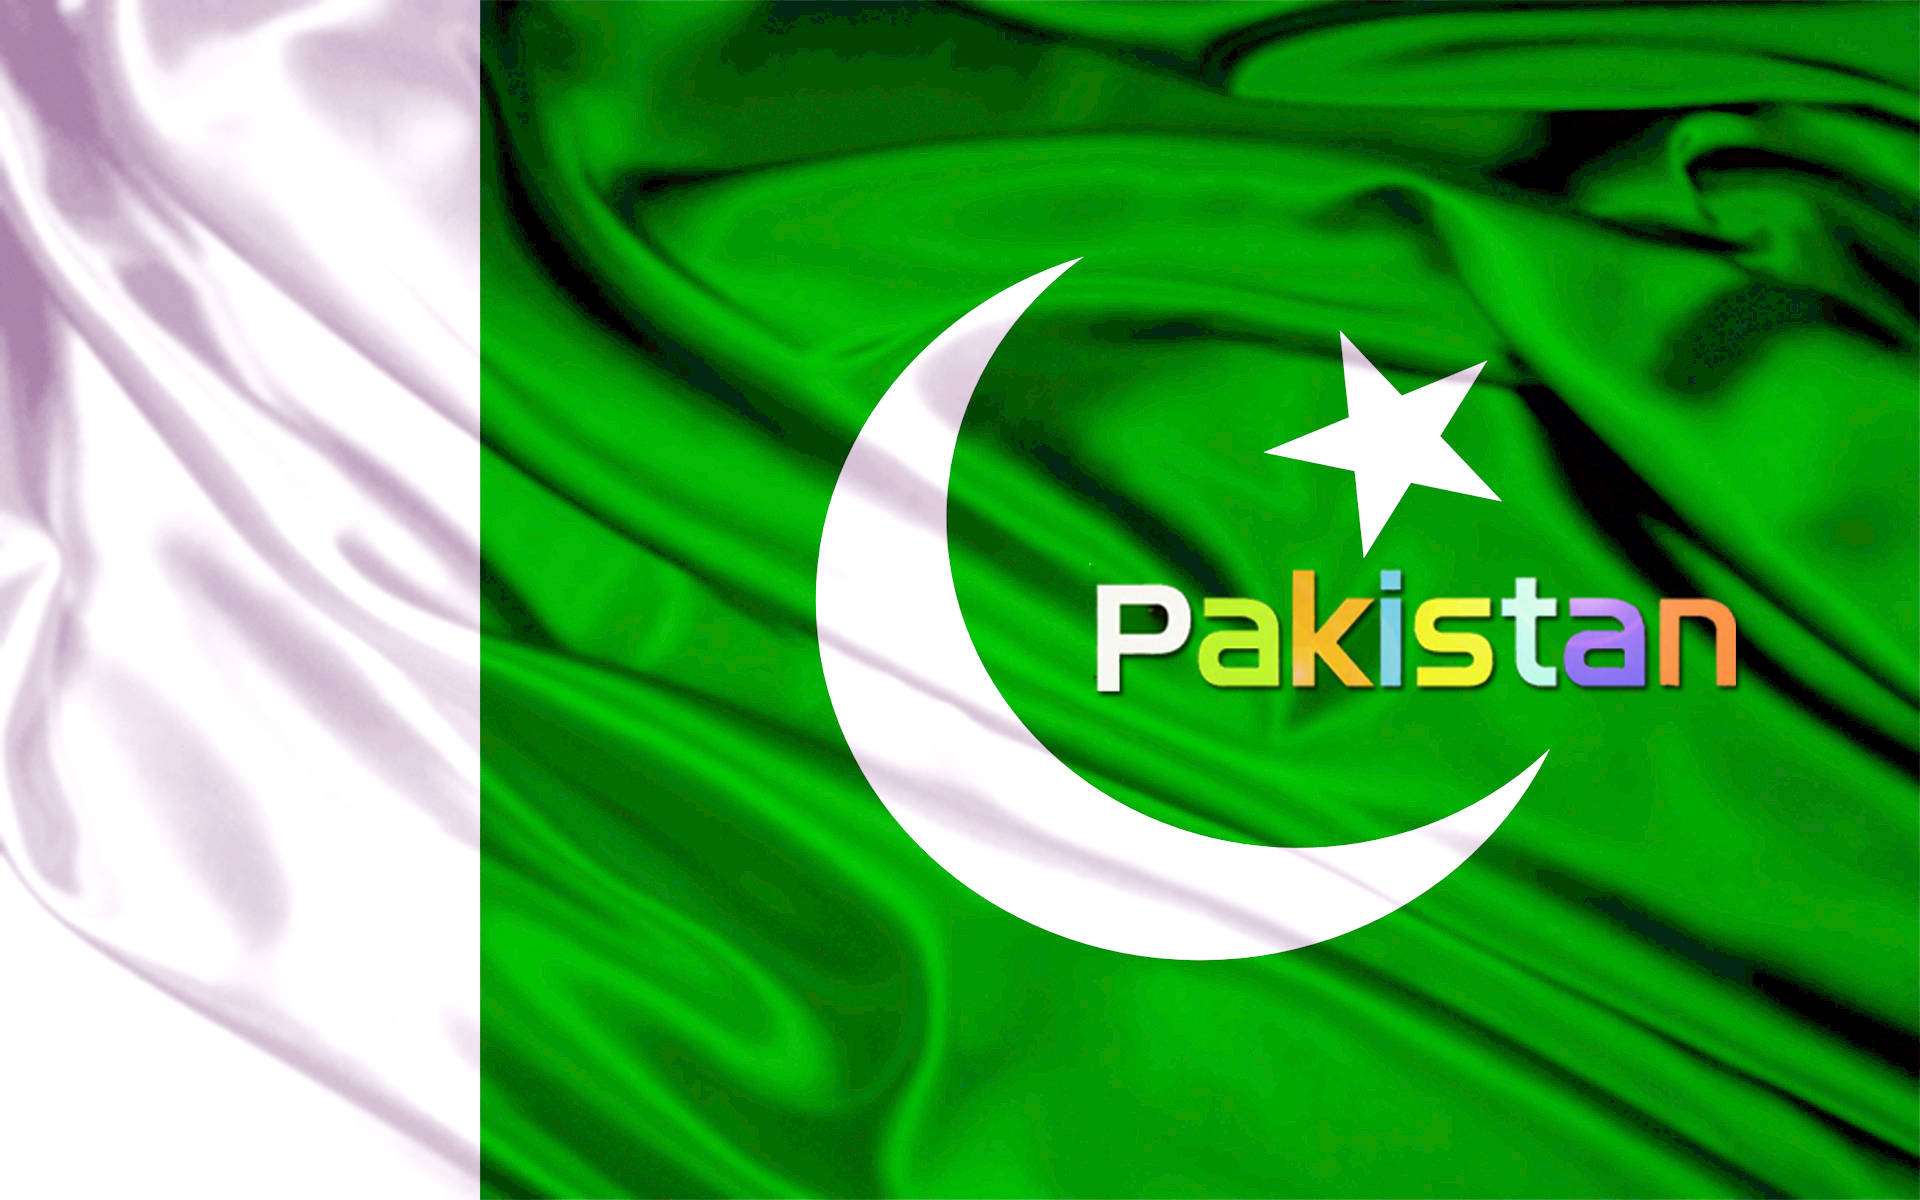 Pakistans Flag Wallpaper